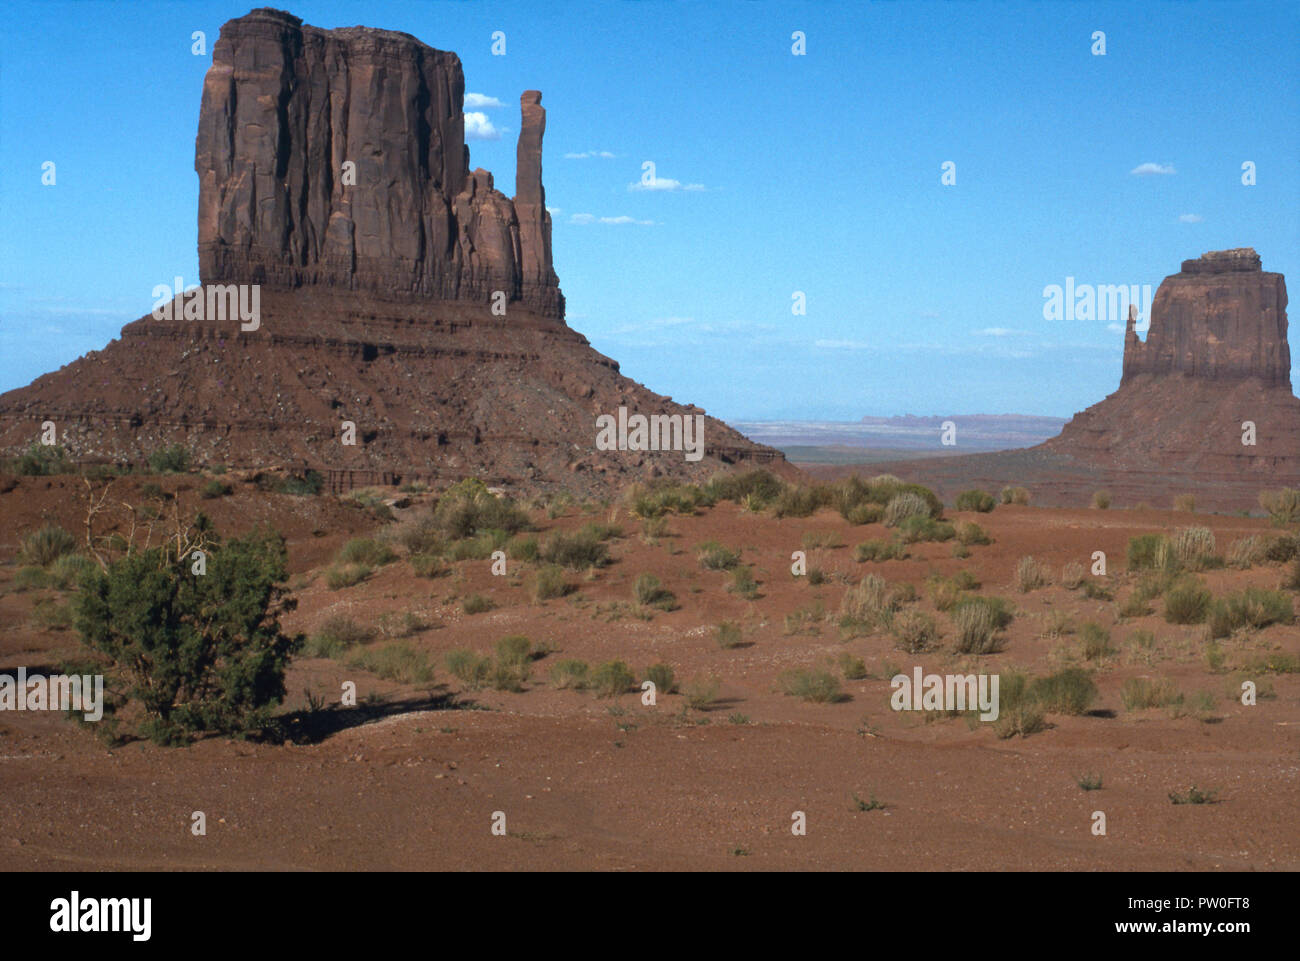 West Mitten butte im Monument Valley Navajo Tribal Park, Arizona/Utah. Foto Stockfoto